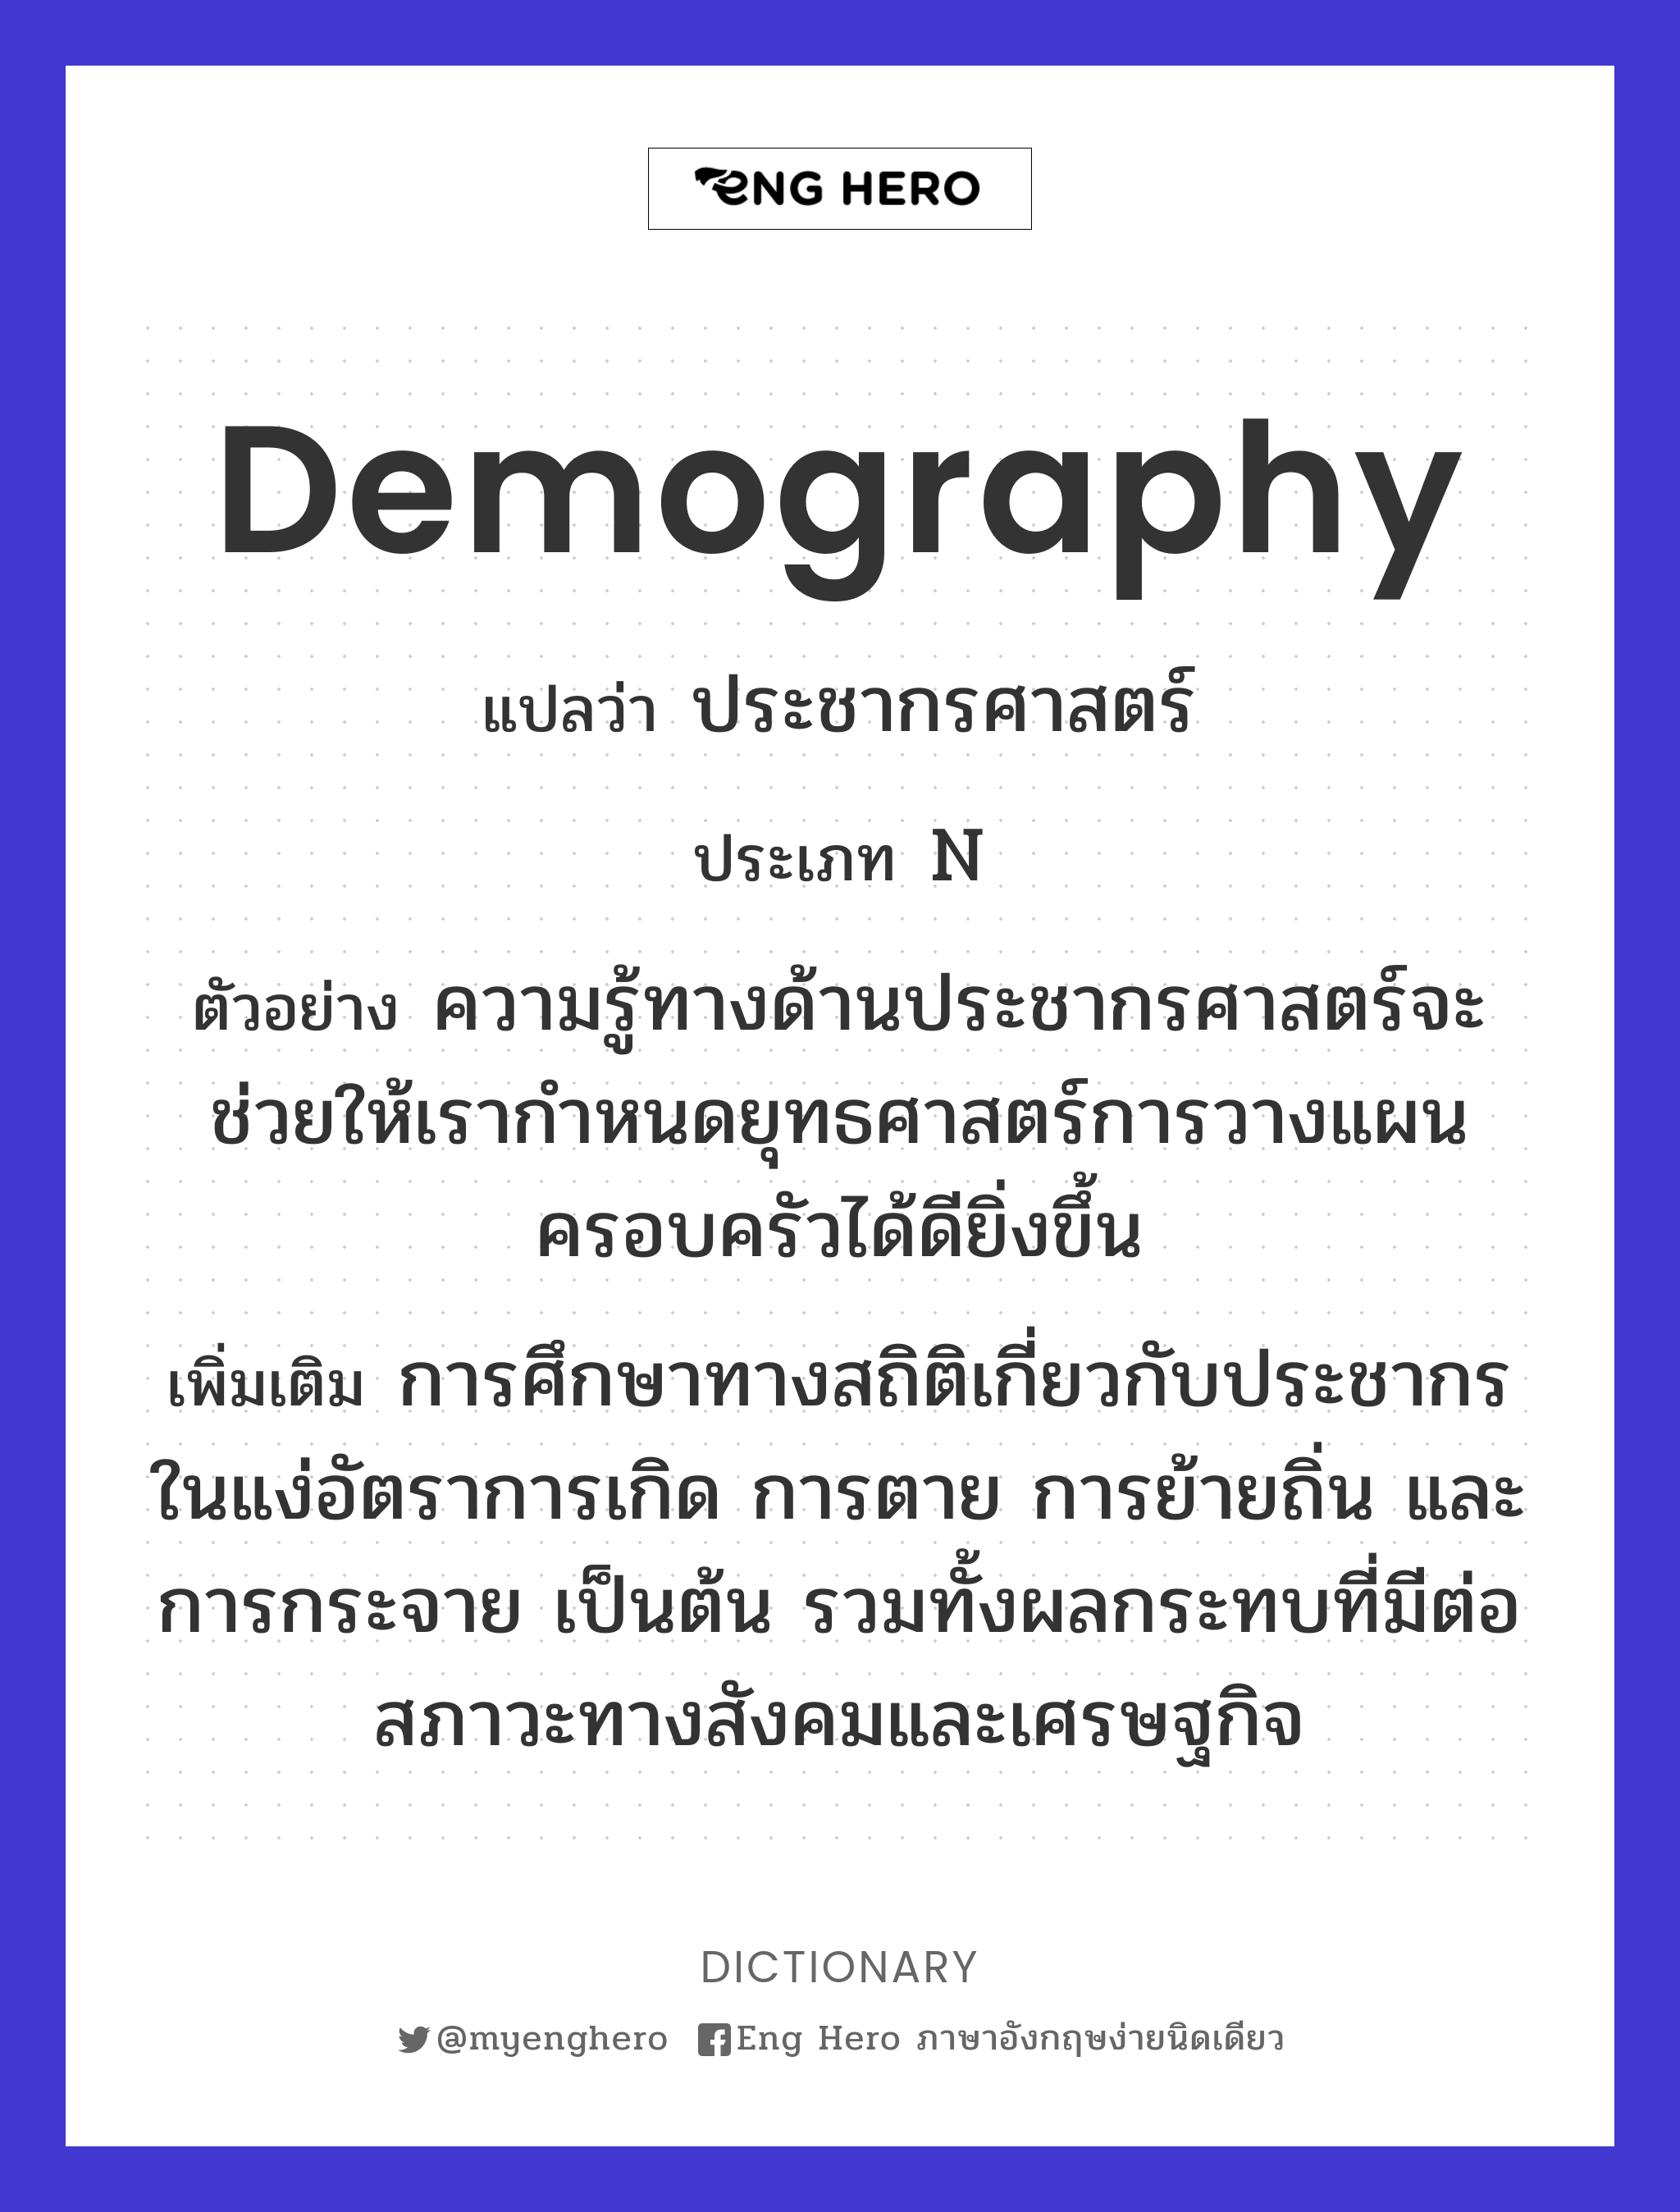 demography